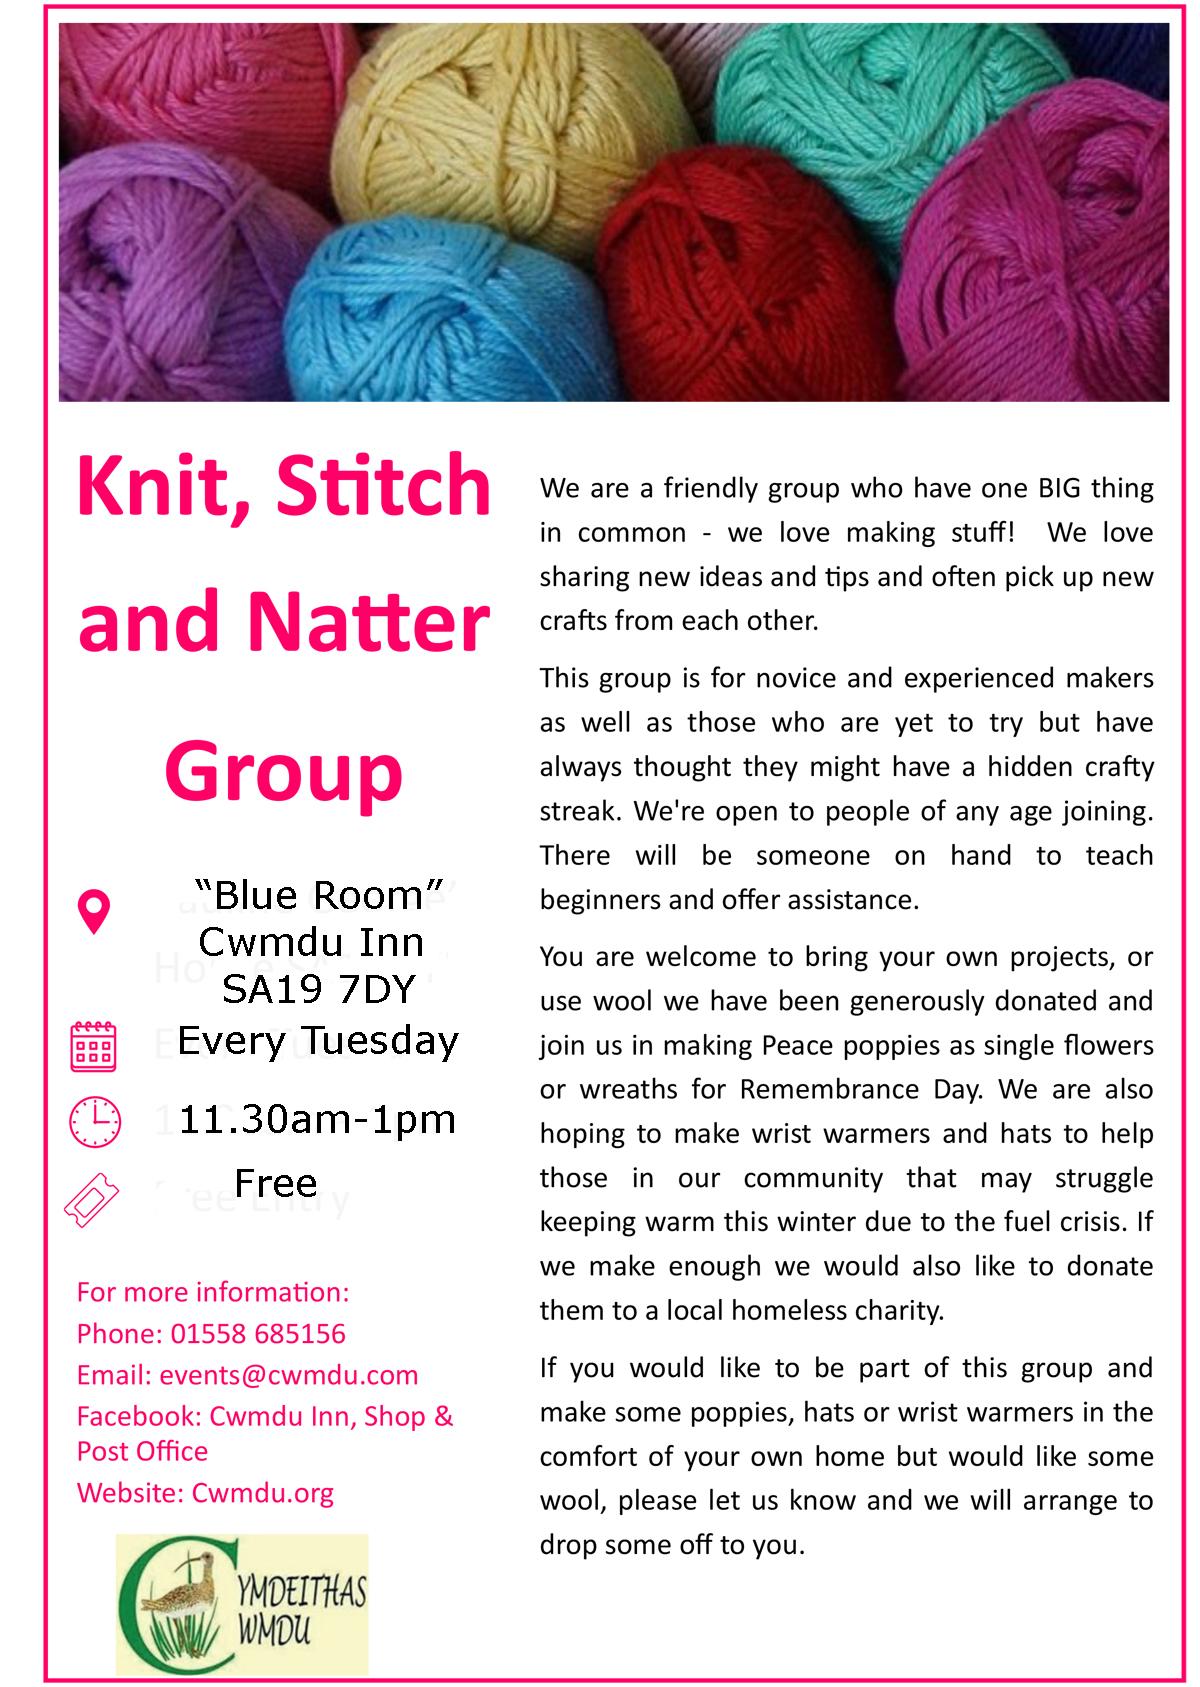 230404 Craft-Group-Knit-stitch-natter-poster